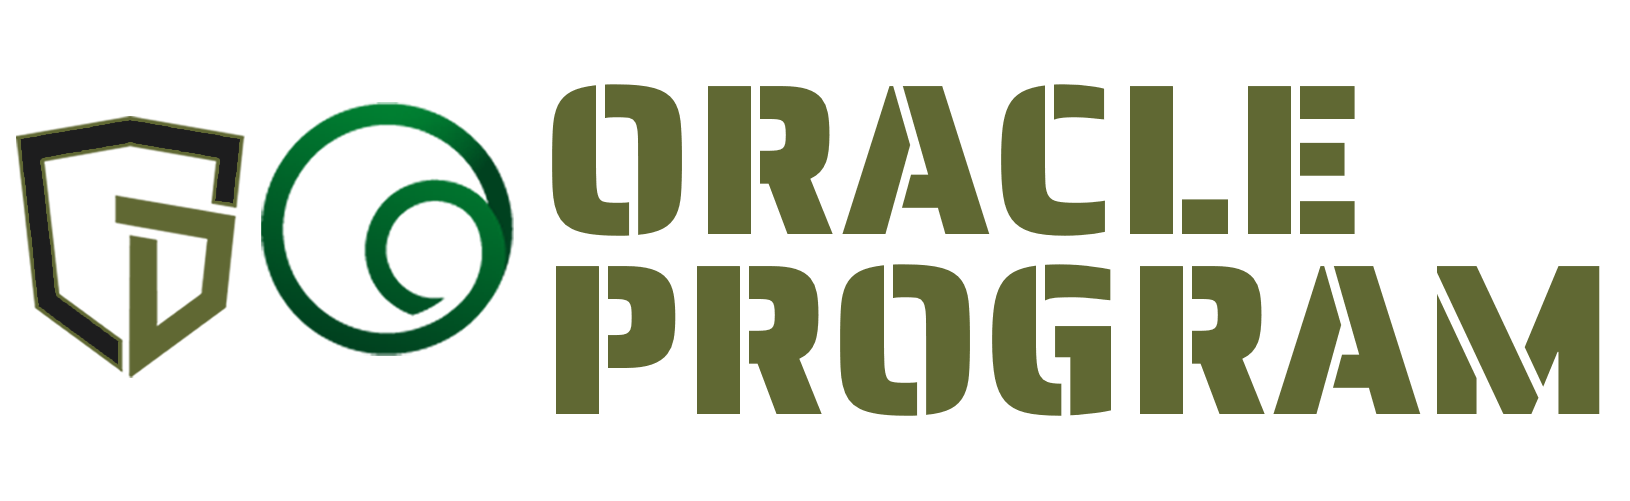 Oracle Program